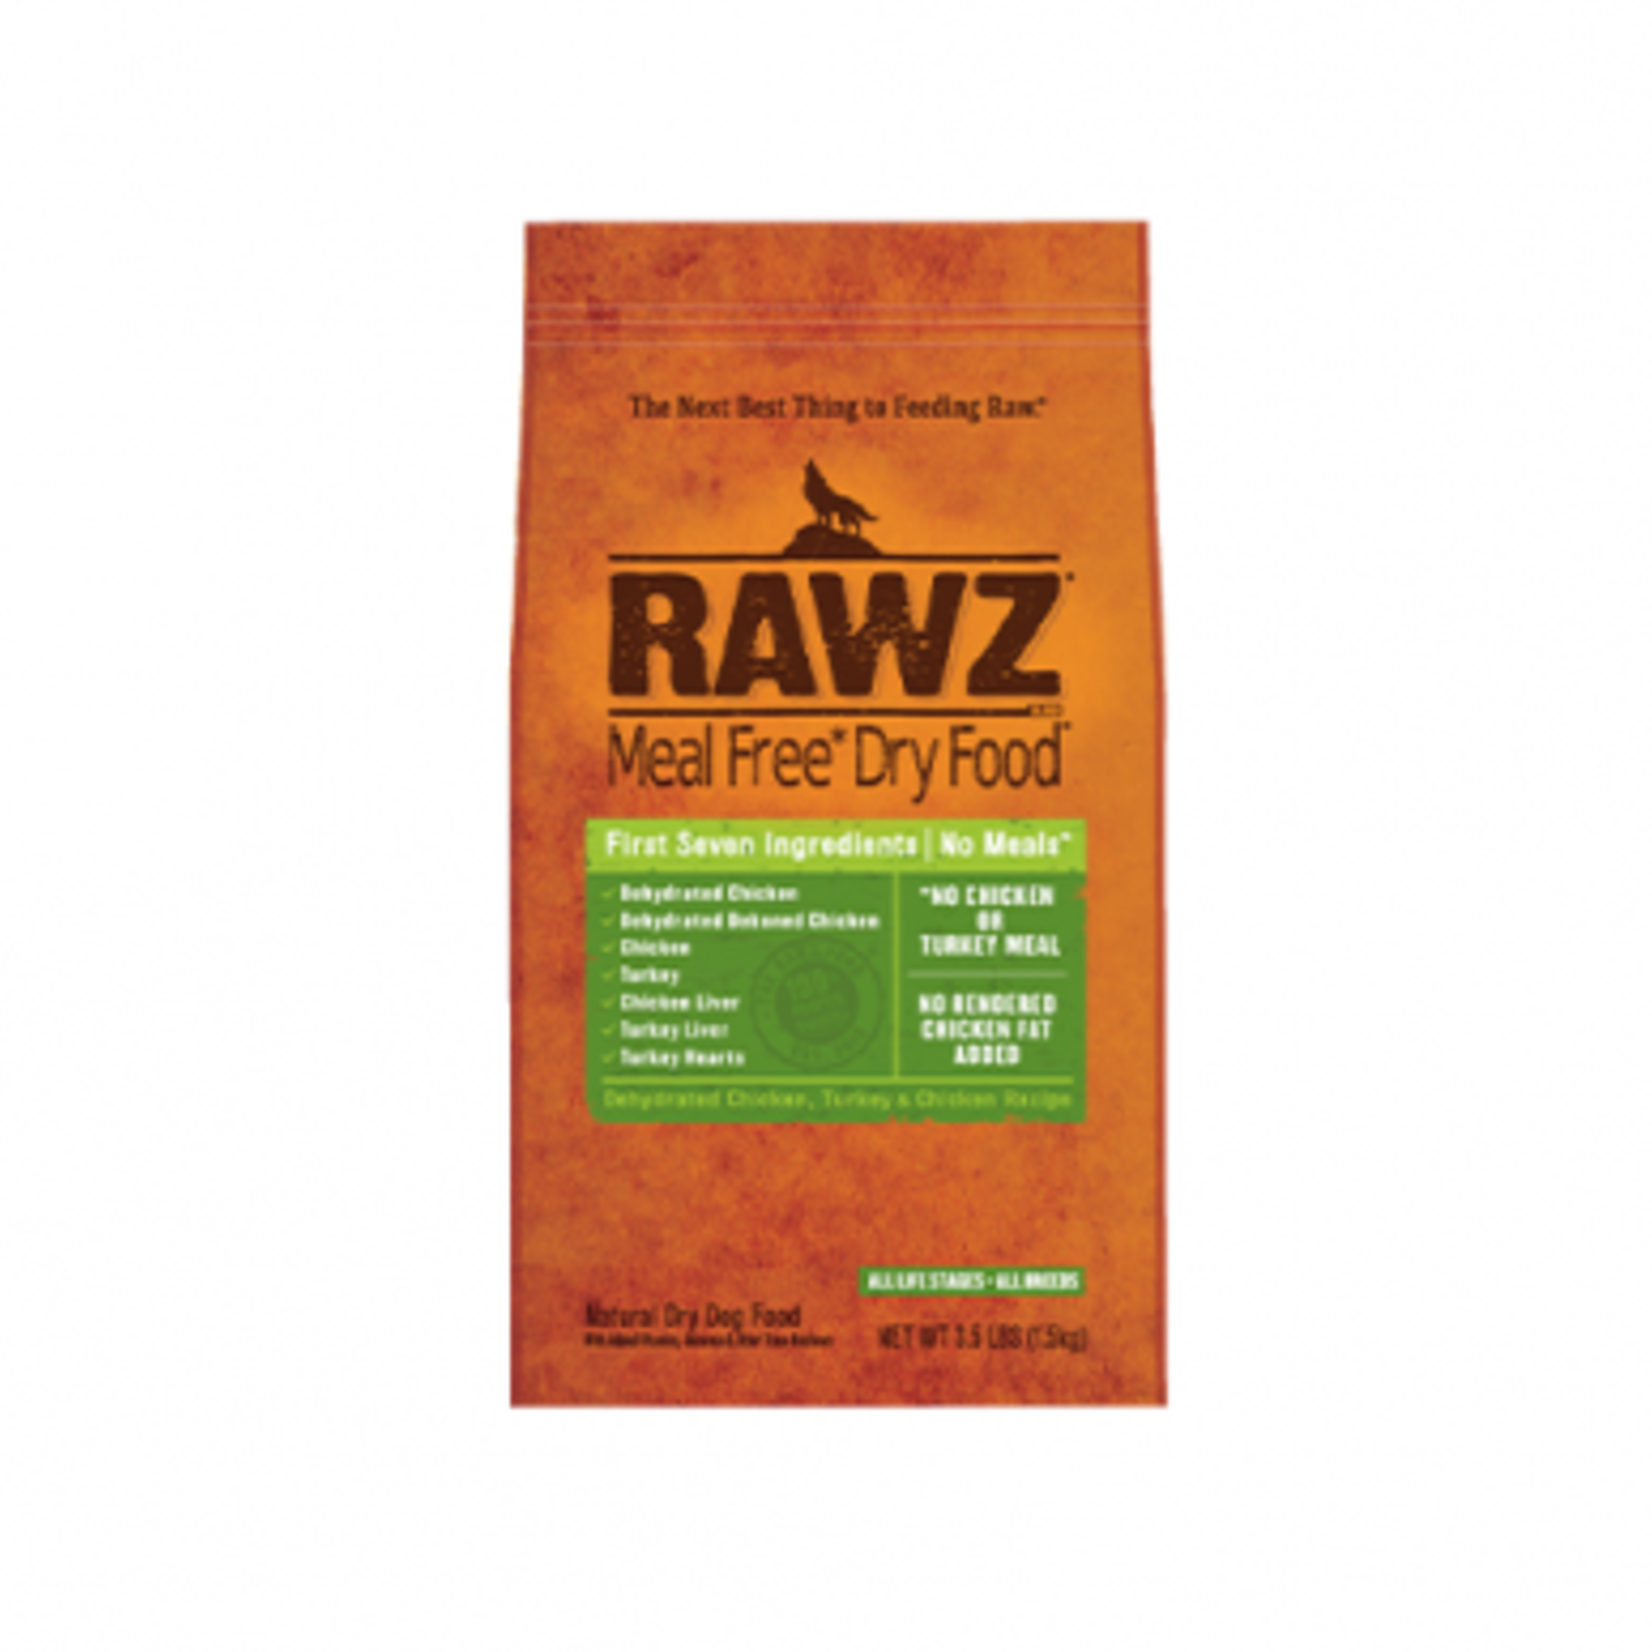 RAWZ Cru séché à froid - Poulet déshydraté - 3.5 lbs